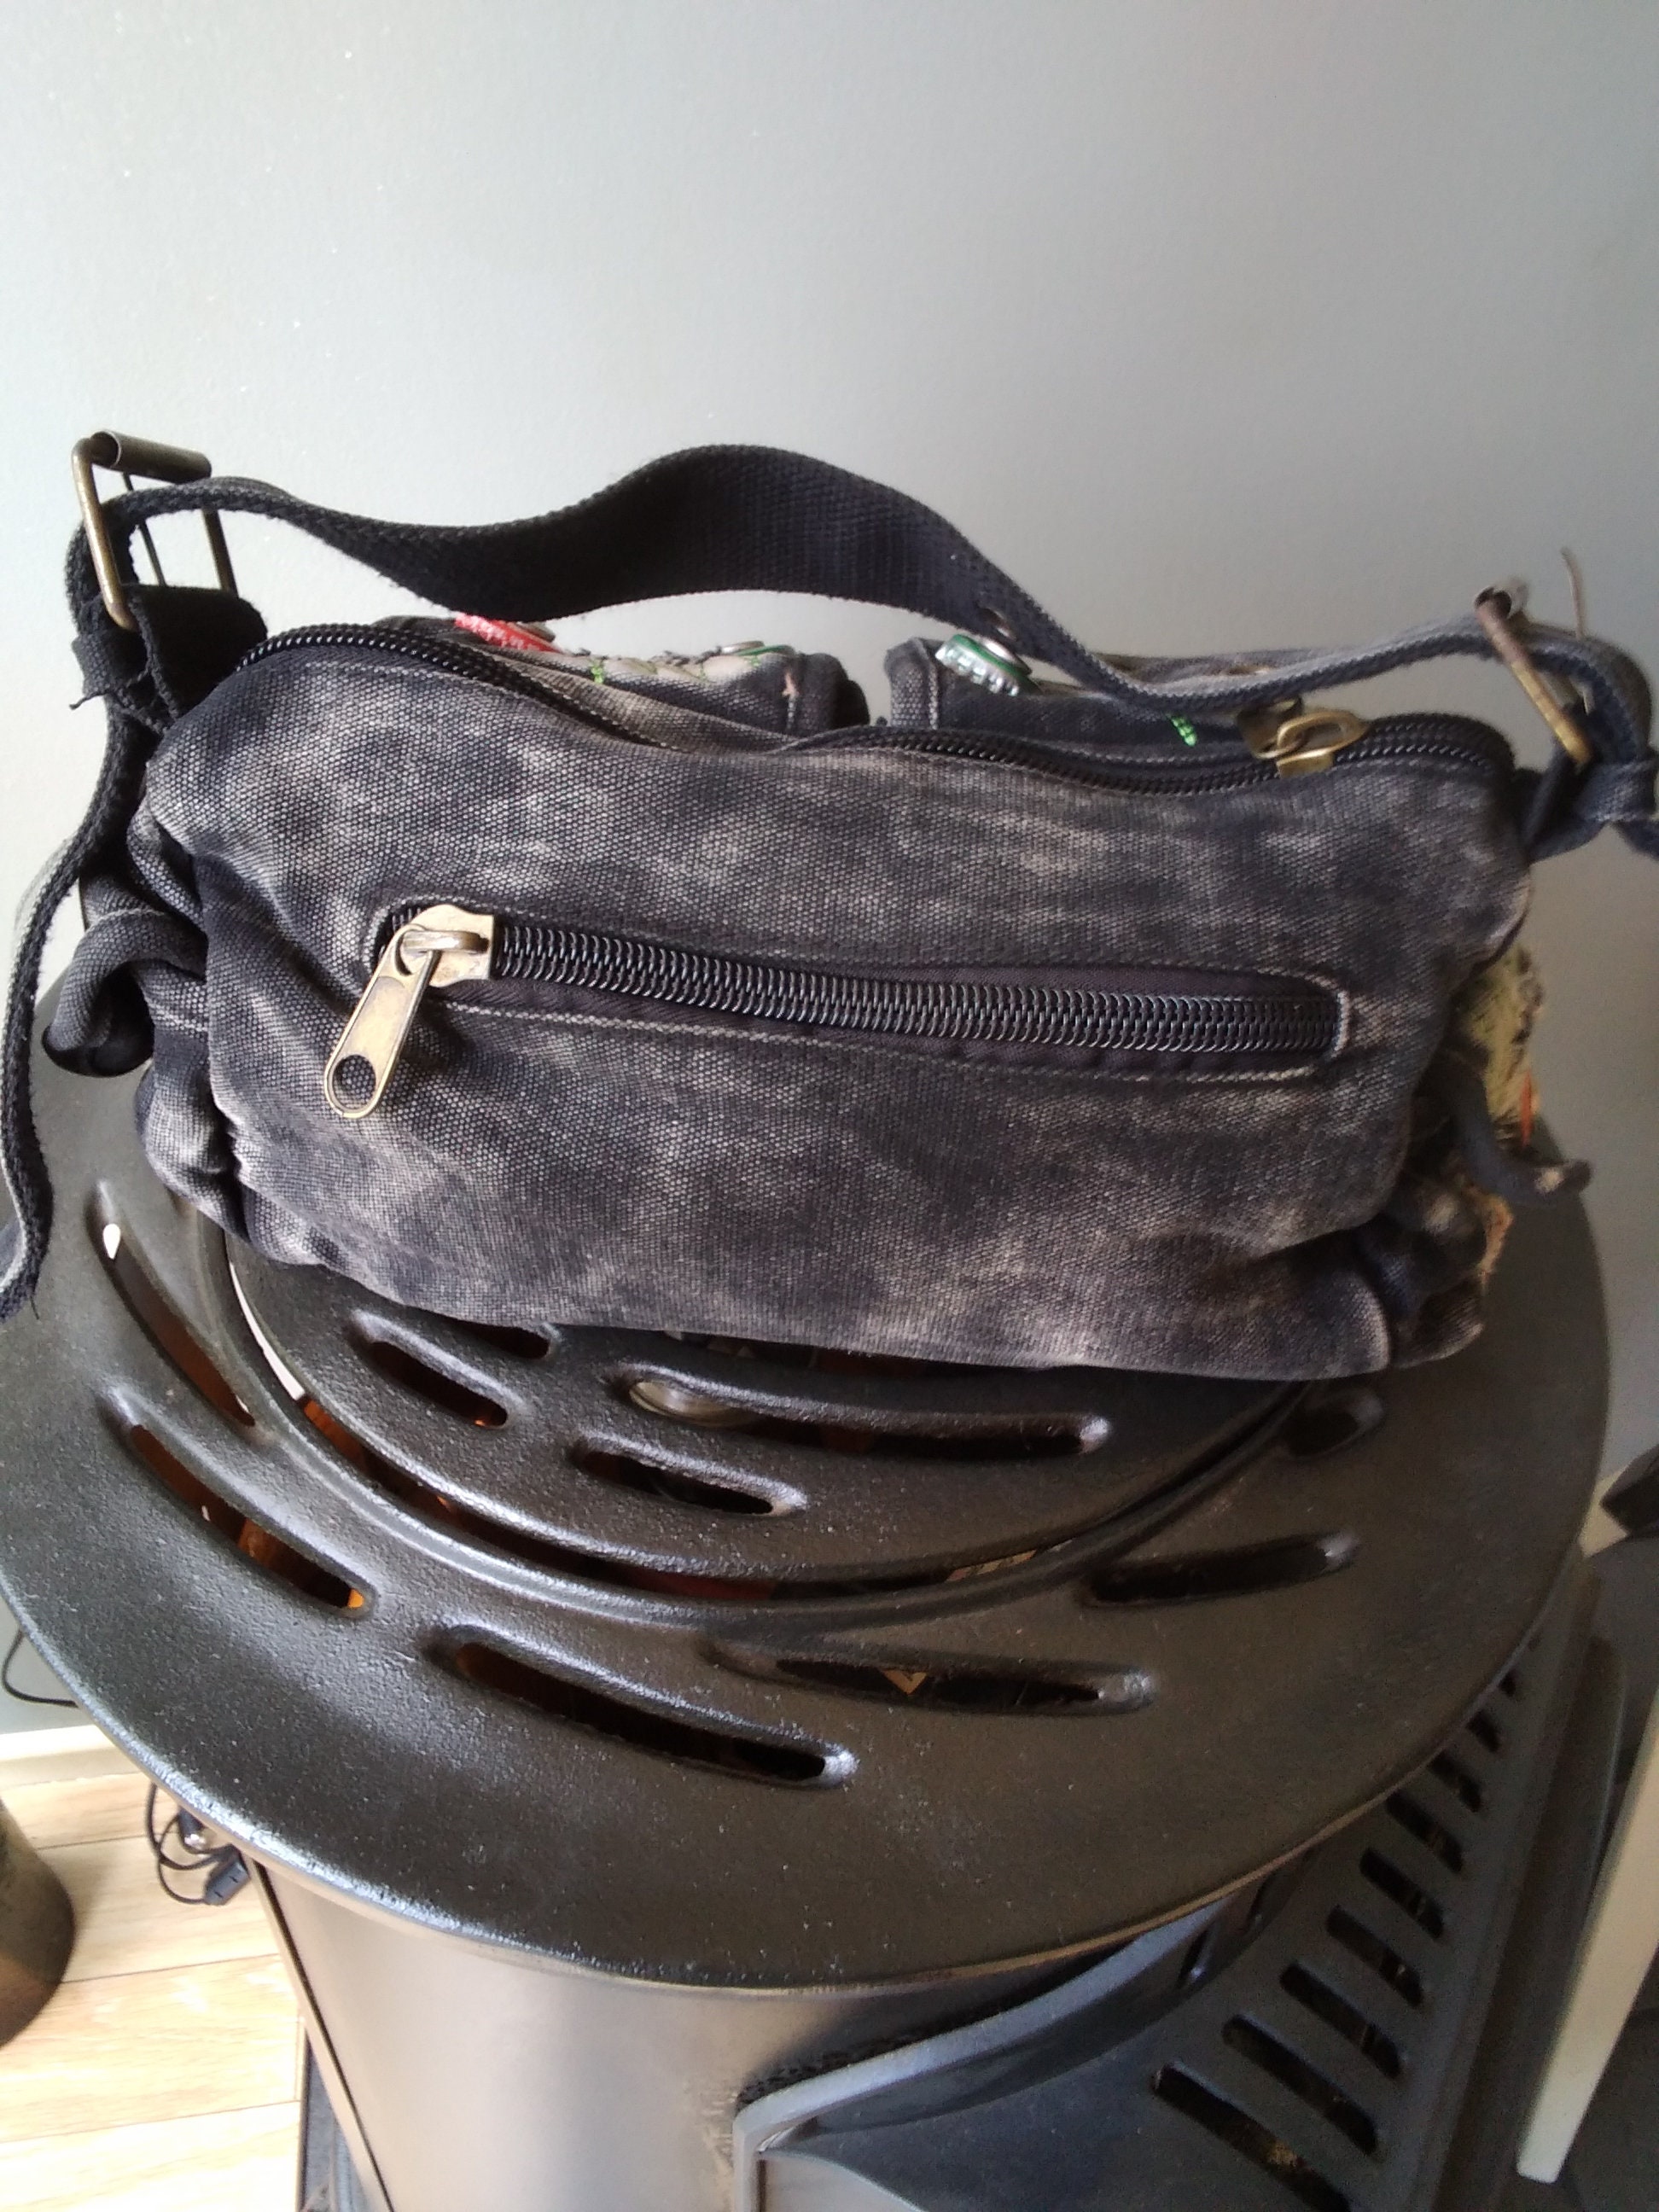 Okpta 1519426 Black Handbag With Shoulder Strap.